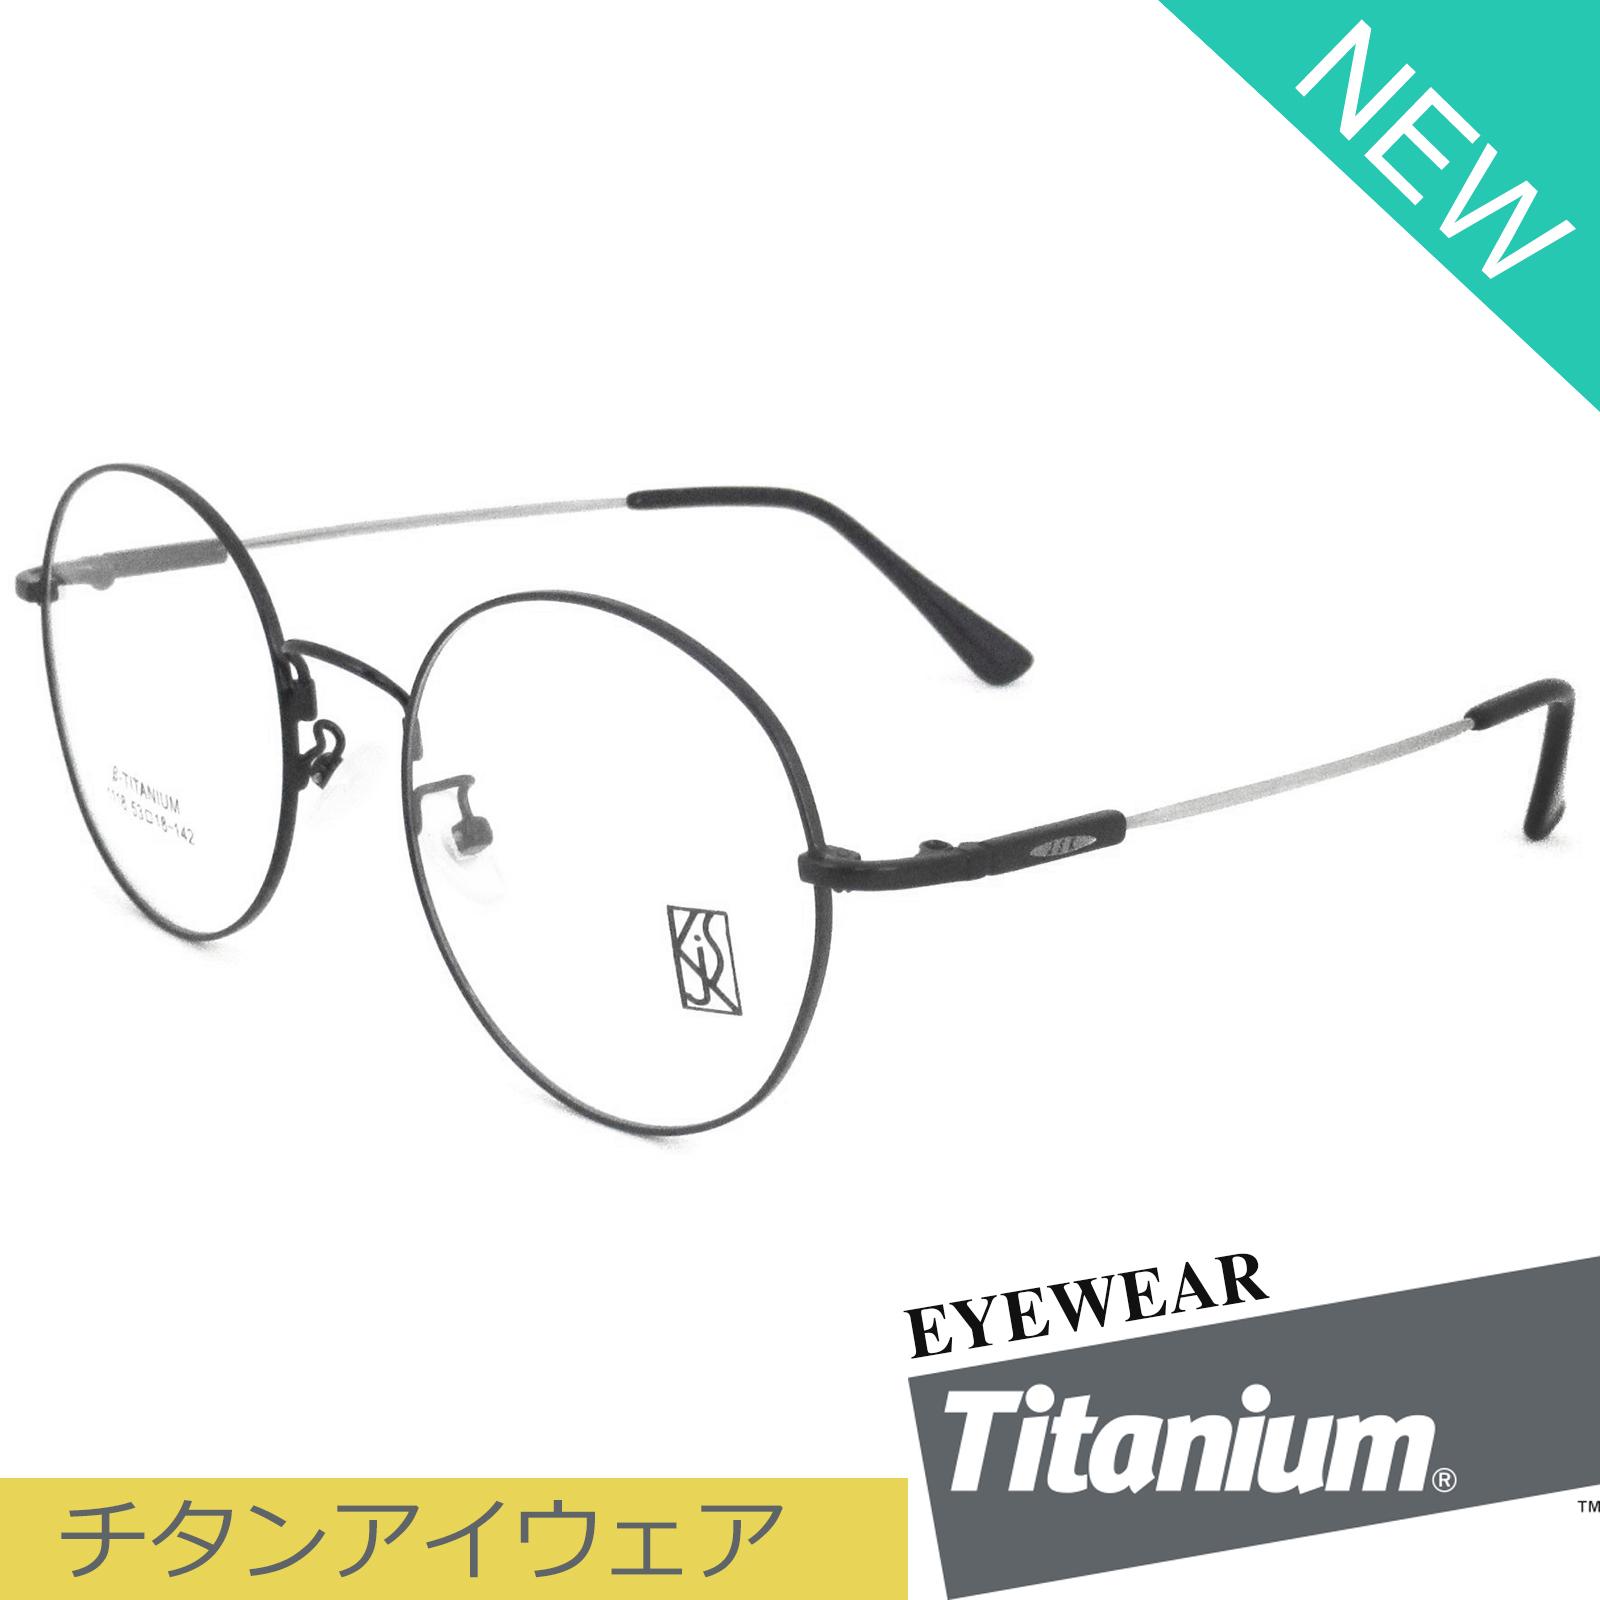 Titanium 100 % แว่นตา รุ่น 1118 สีดำ กรอบเต็ม Round ทรงกลม ขาข้อต่อ วัสดุ ไทเทเนียม (สำหรับตัดเลนส์) กรอบแว่นตา สวมใส่สบาย น้ำหนักเบา ไม่ตกเทรนด์ มีความแข็งแรงทนทาน Full frame Eyeglass leg joints Titanium material Eyewear Top Glasses